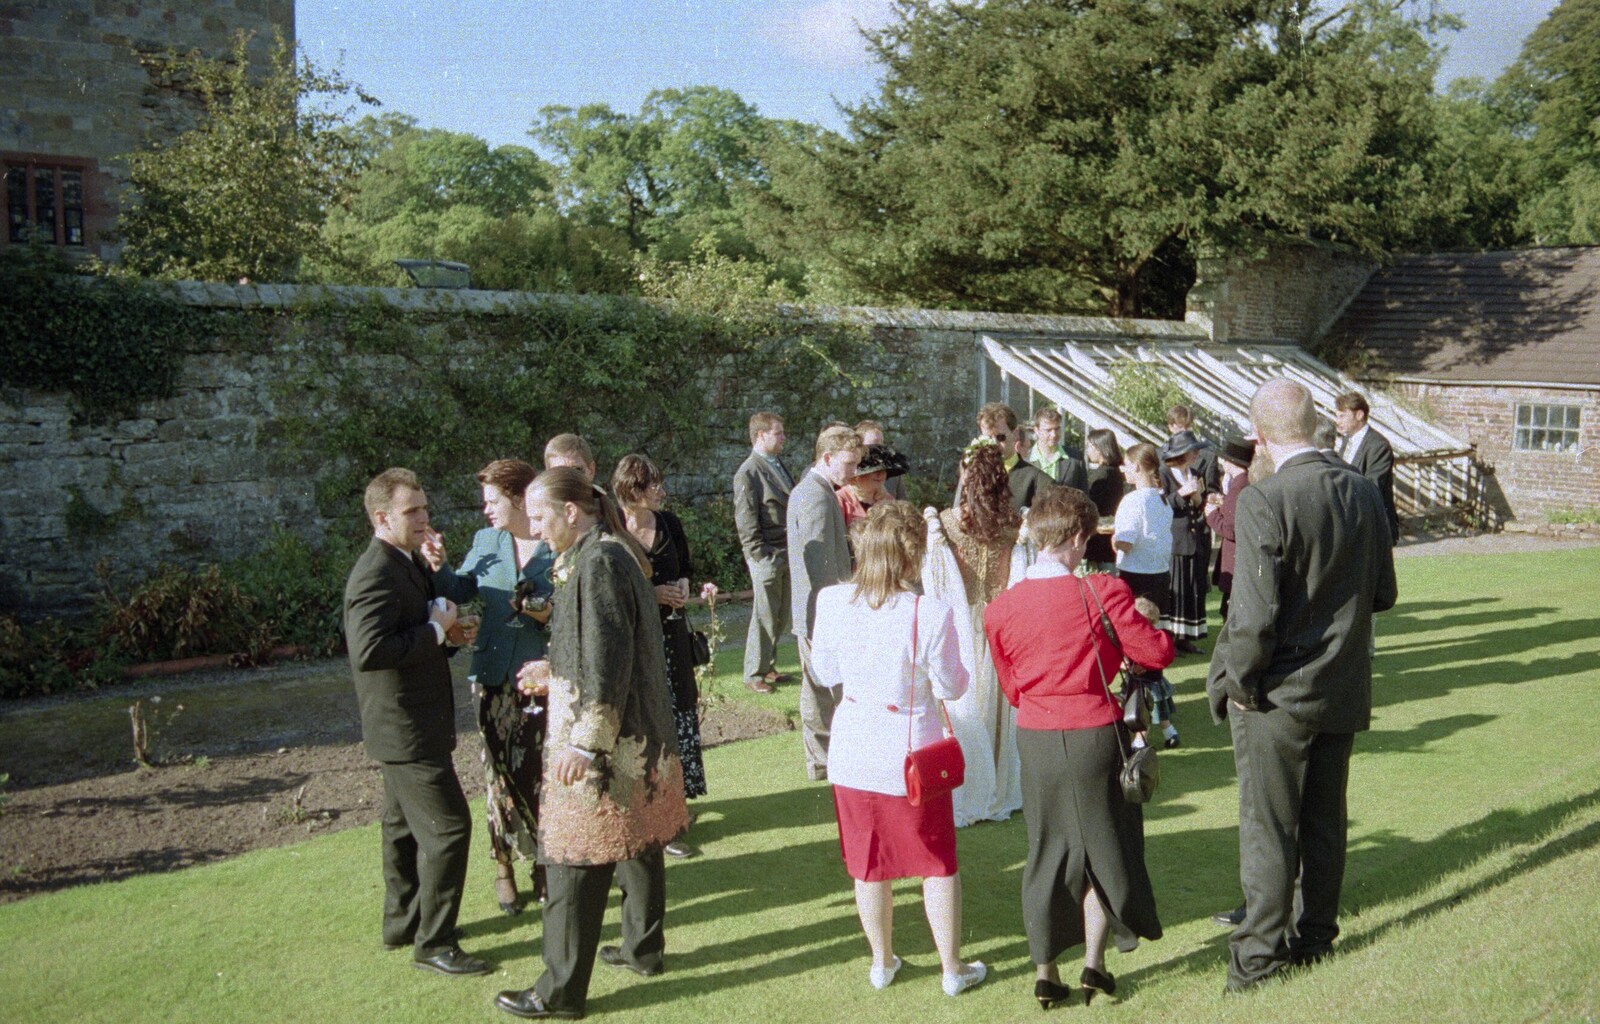 Stuart and Sarah's CISU Wedding, Naworth Castle, Brampton, Cumbria - 21st September 1996: Mingling by the greenhouse